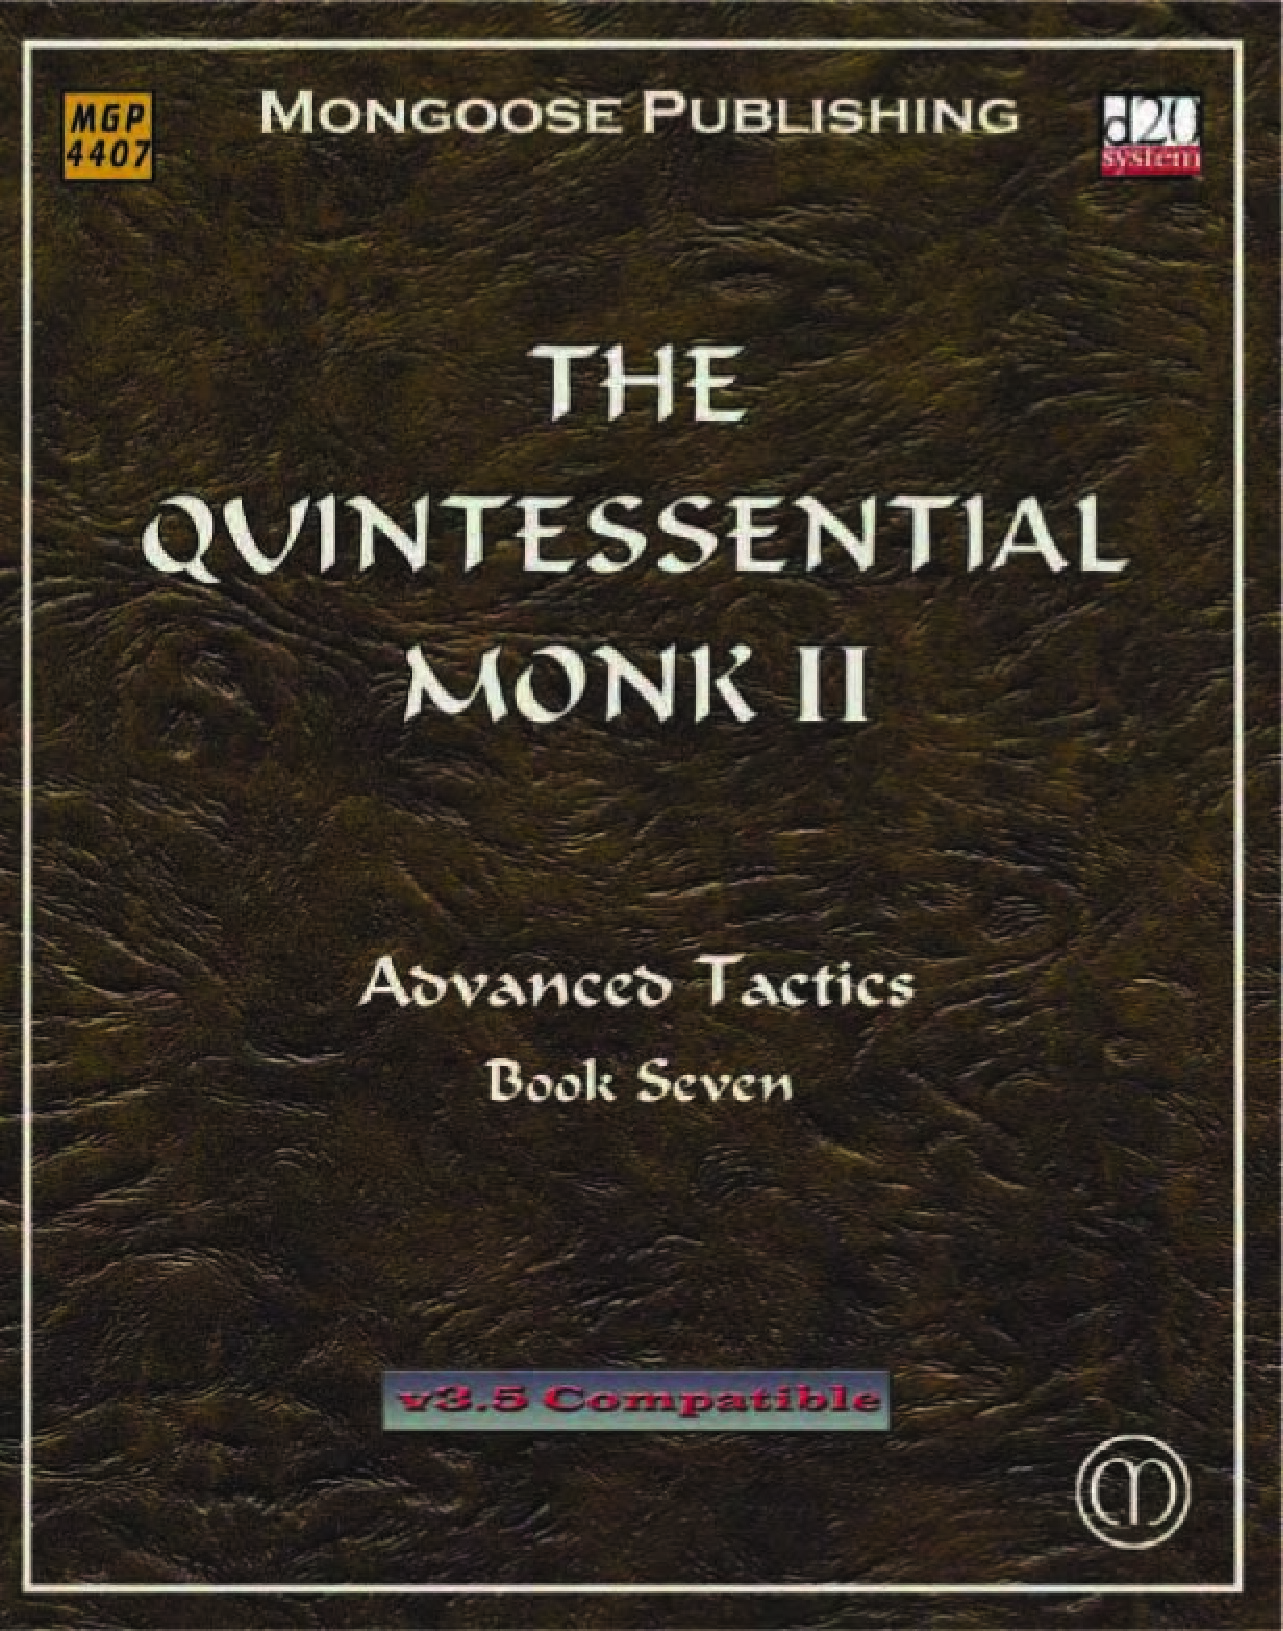 The Quintessential Monk II